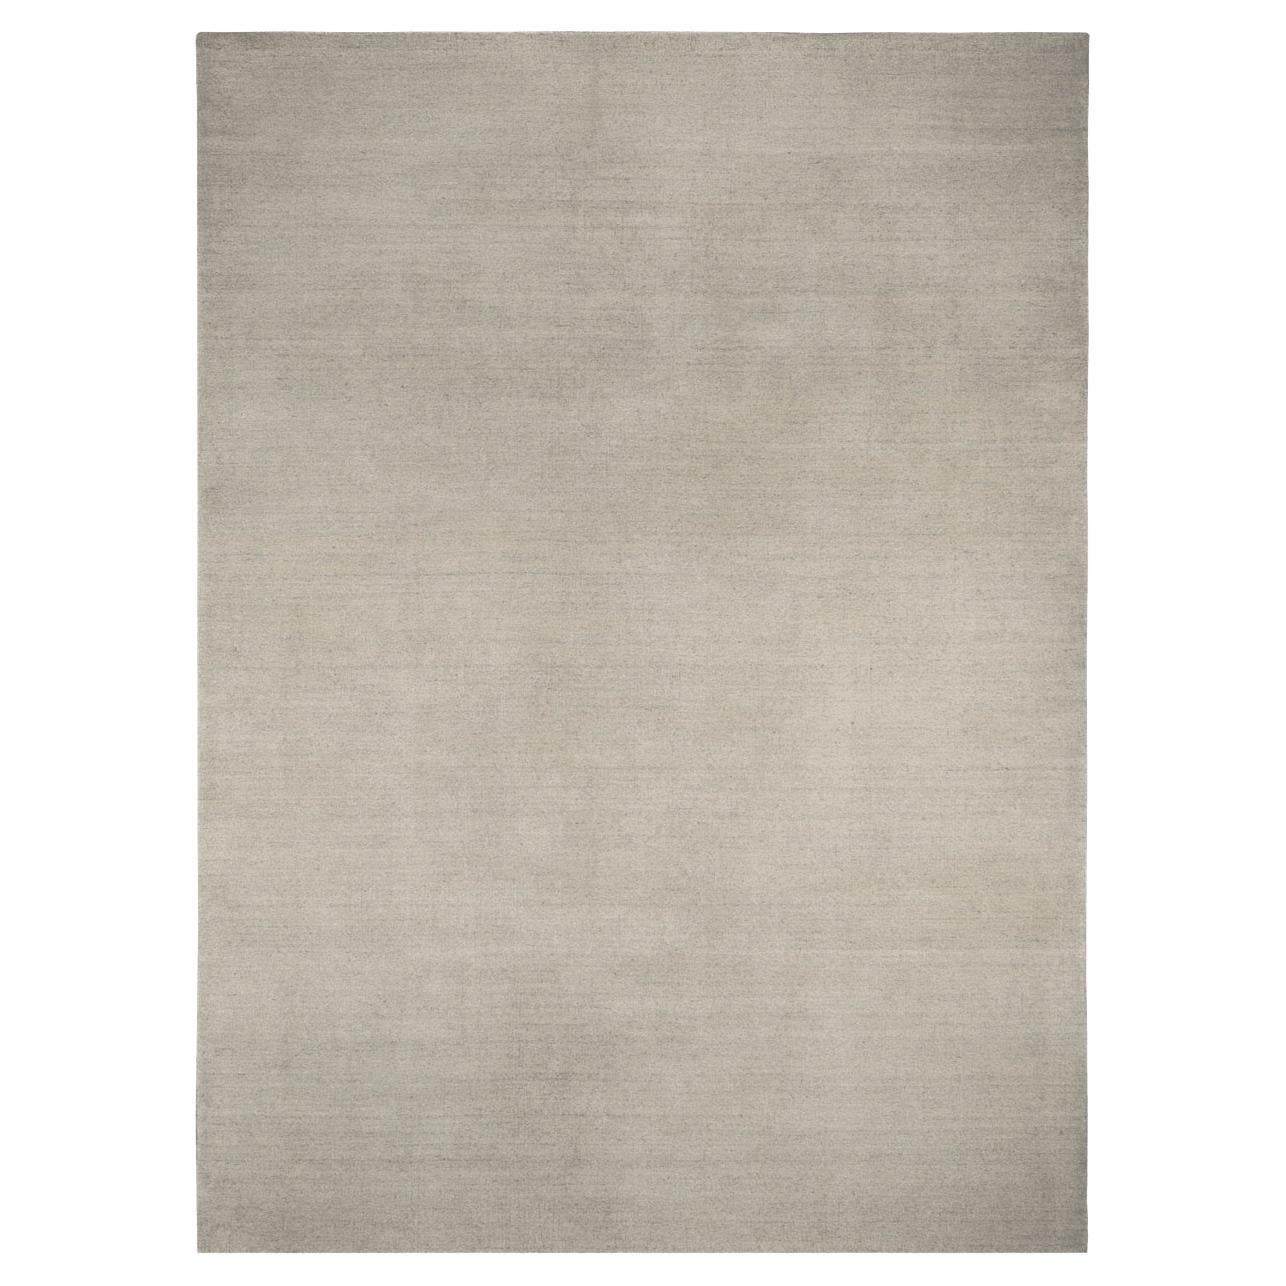 Silver Grey Earth Natural Carpet by Massimo Copenhagen